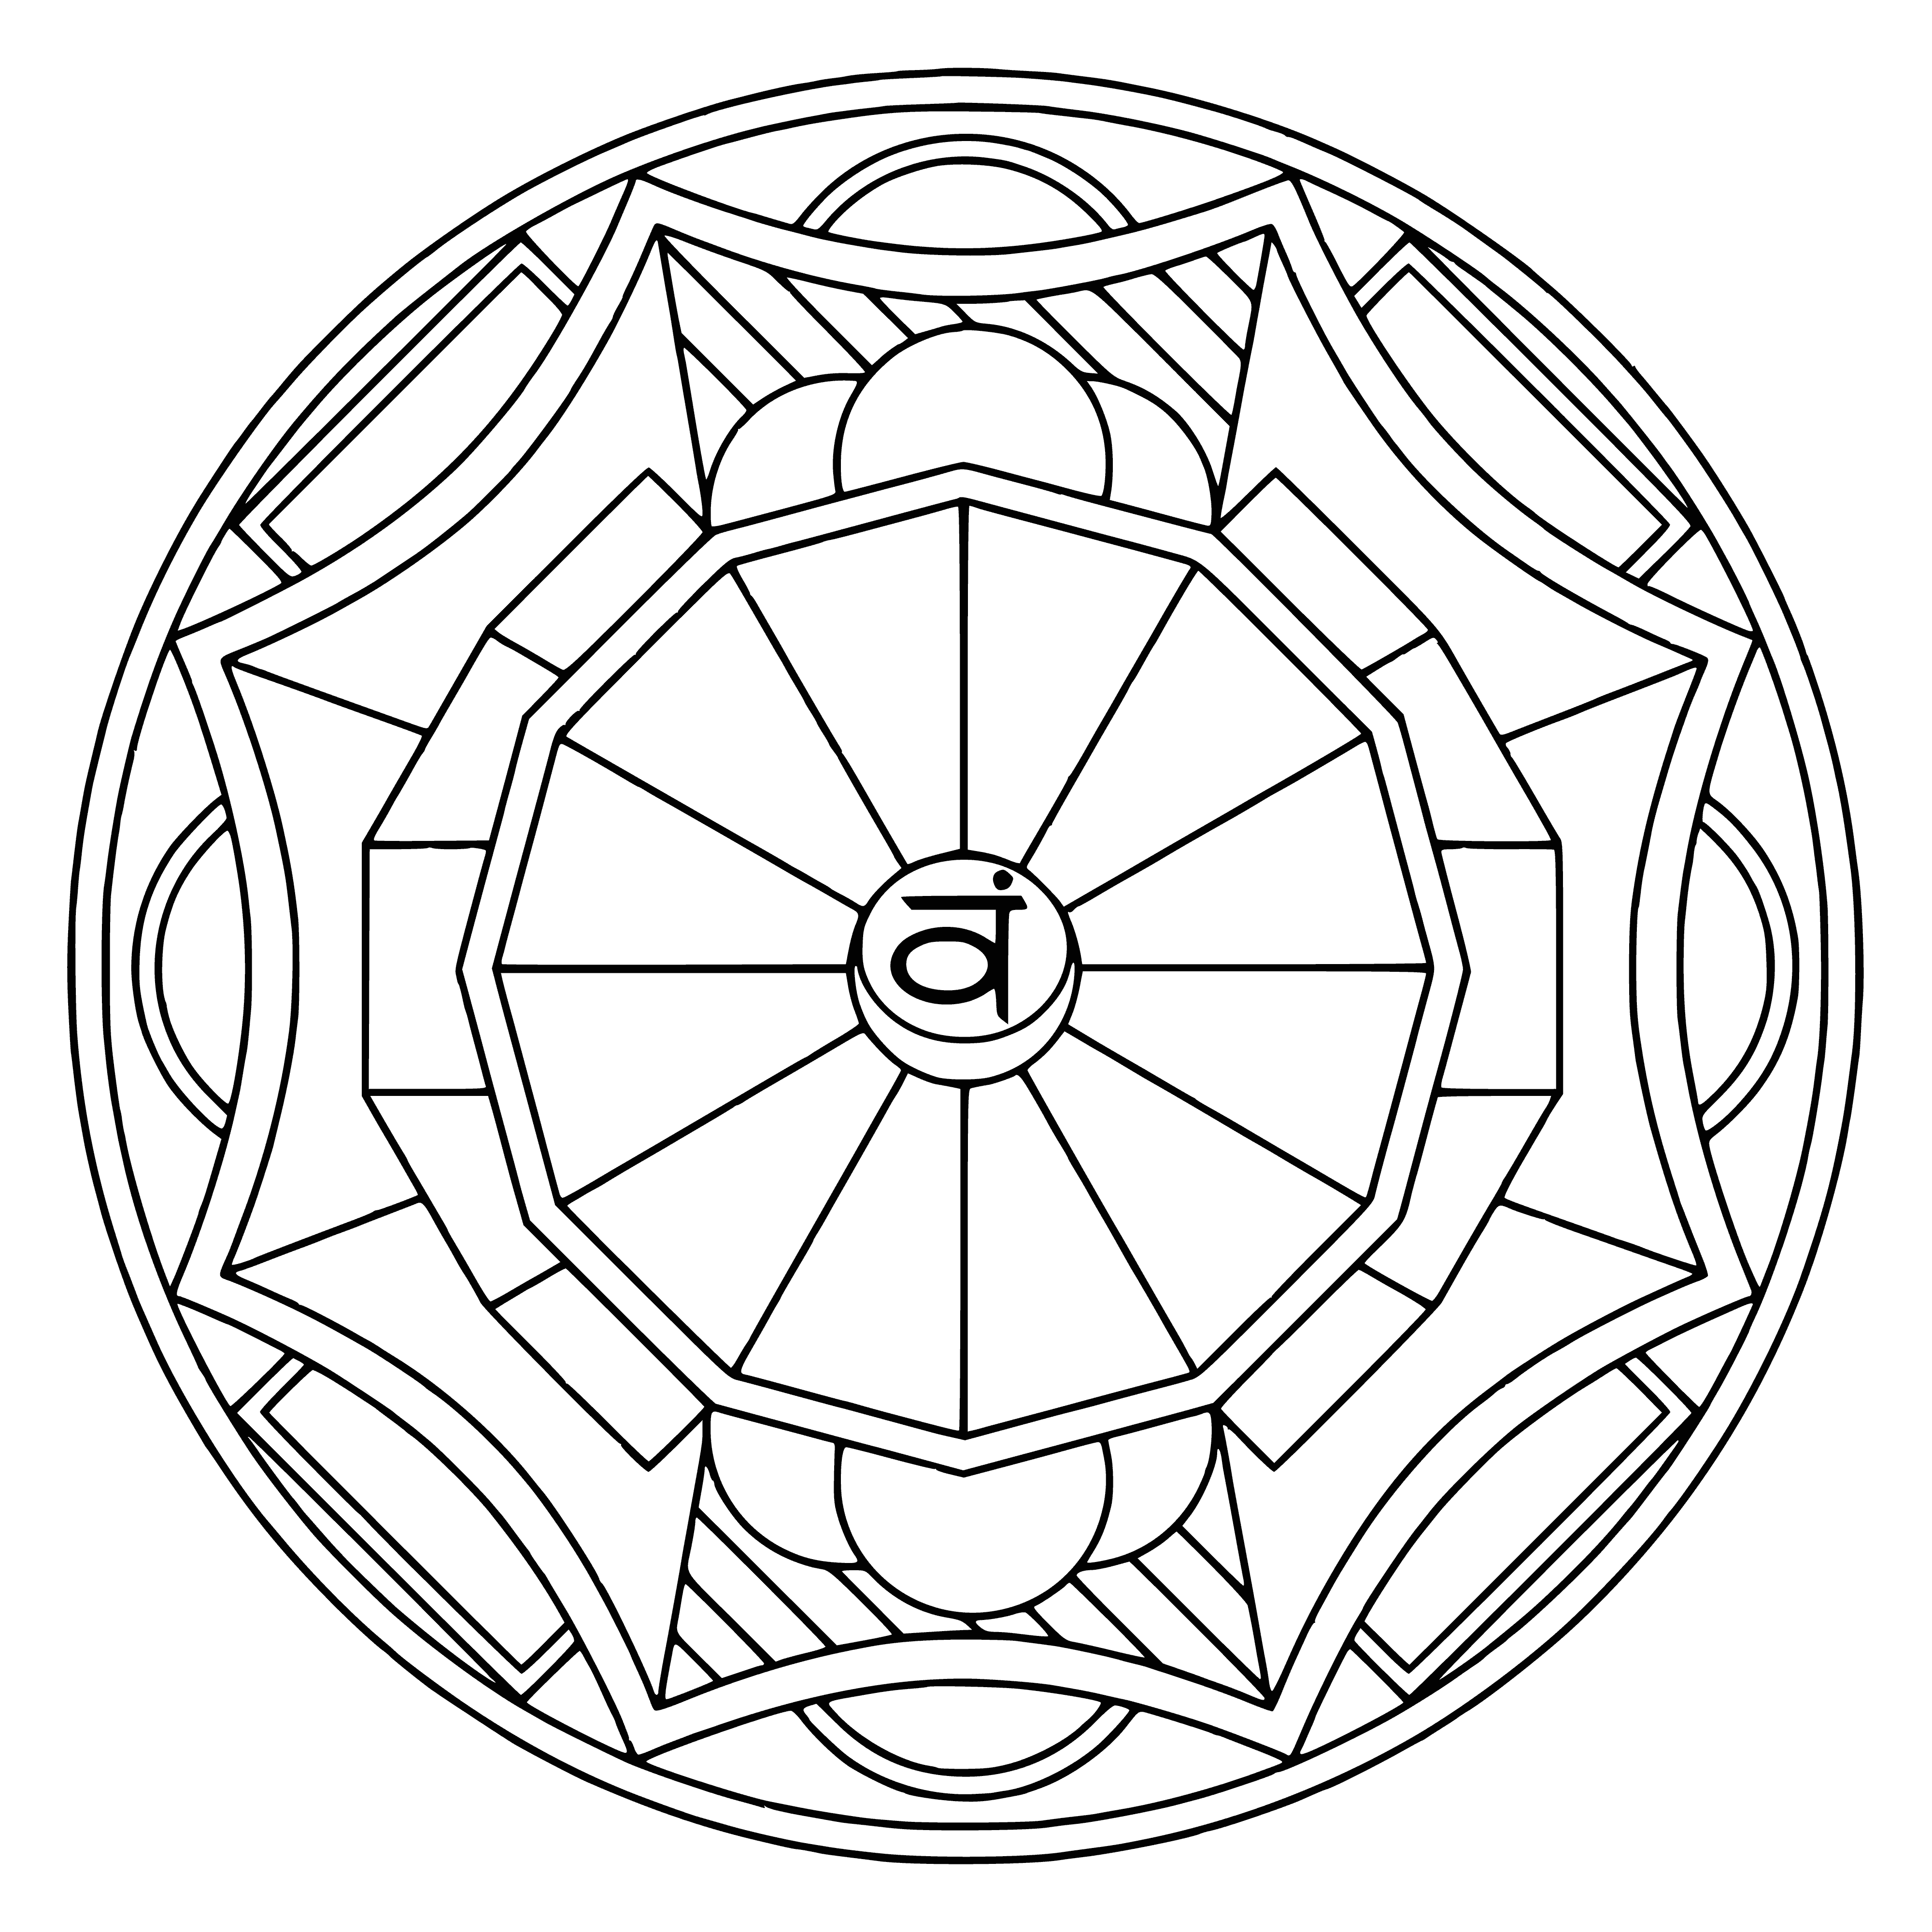 Mandala z symbolem Swadhisthana kolorowanka